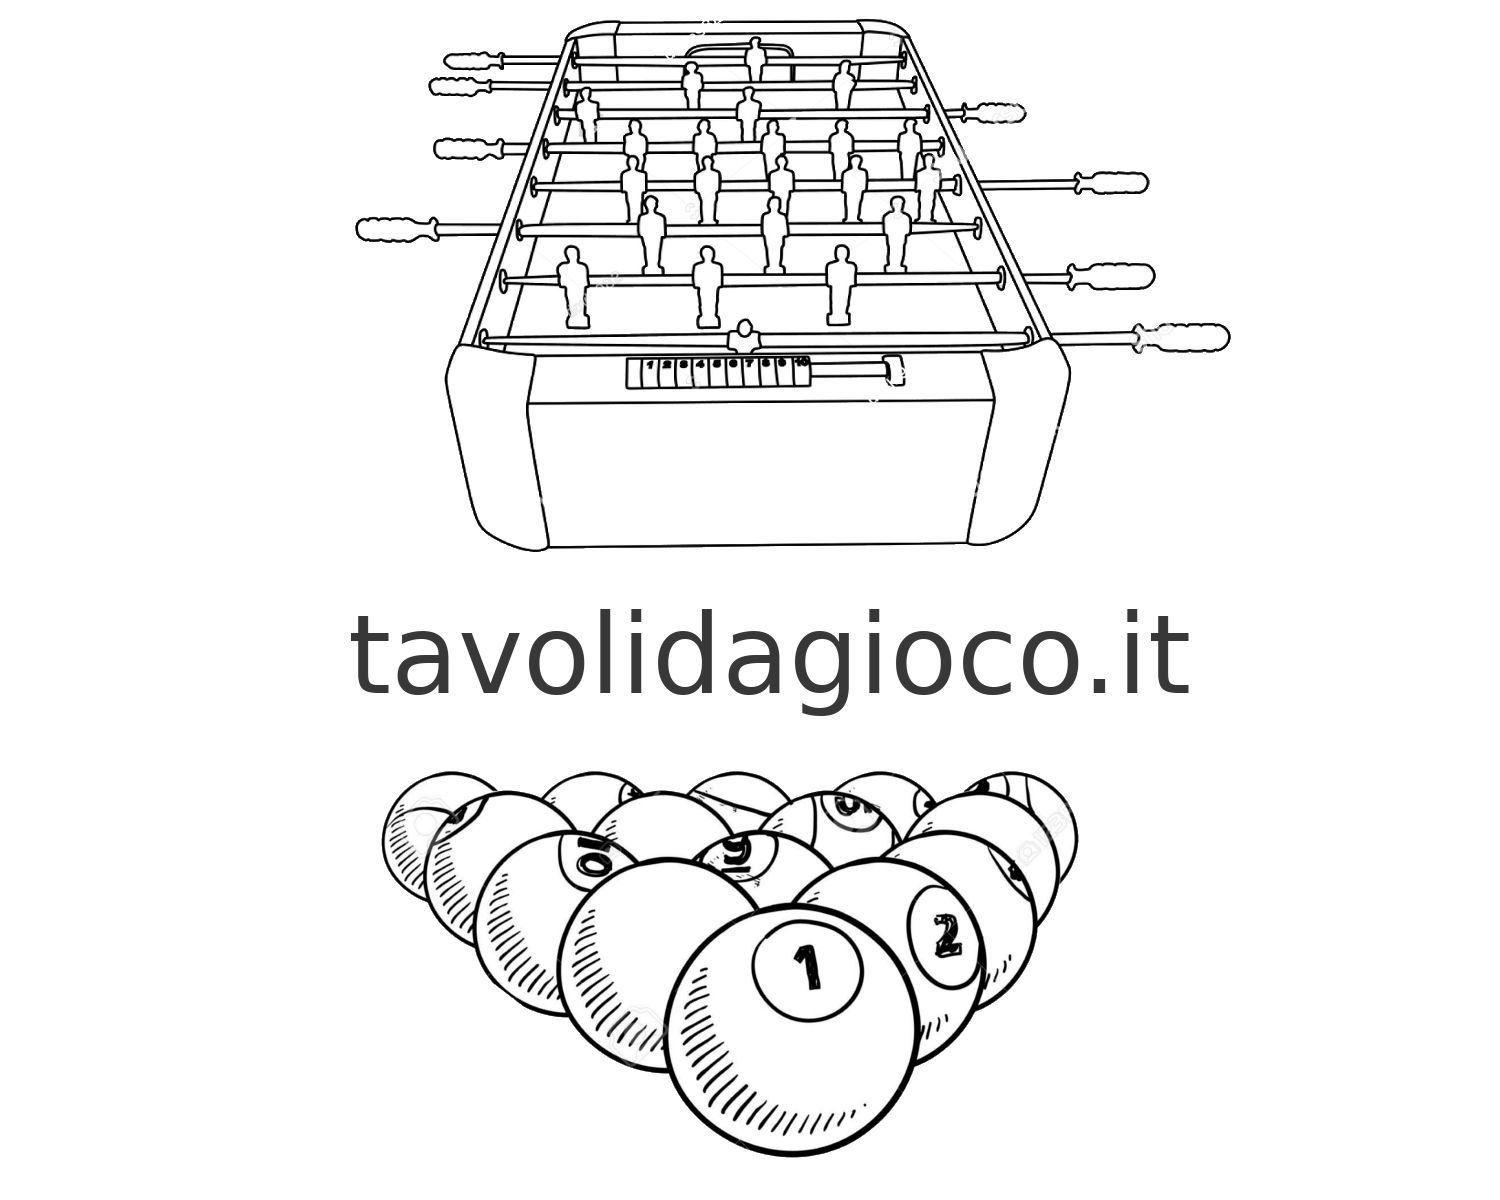 Biliardo Tavolo SENECA NERO 3 in 1 trasformabile in Tavolo - Biliardo - Ping Pong